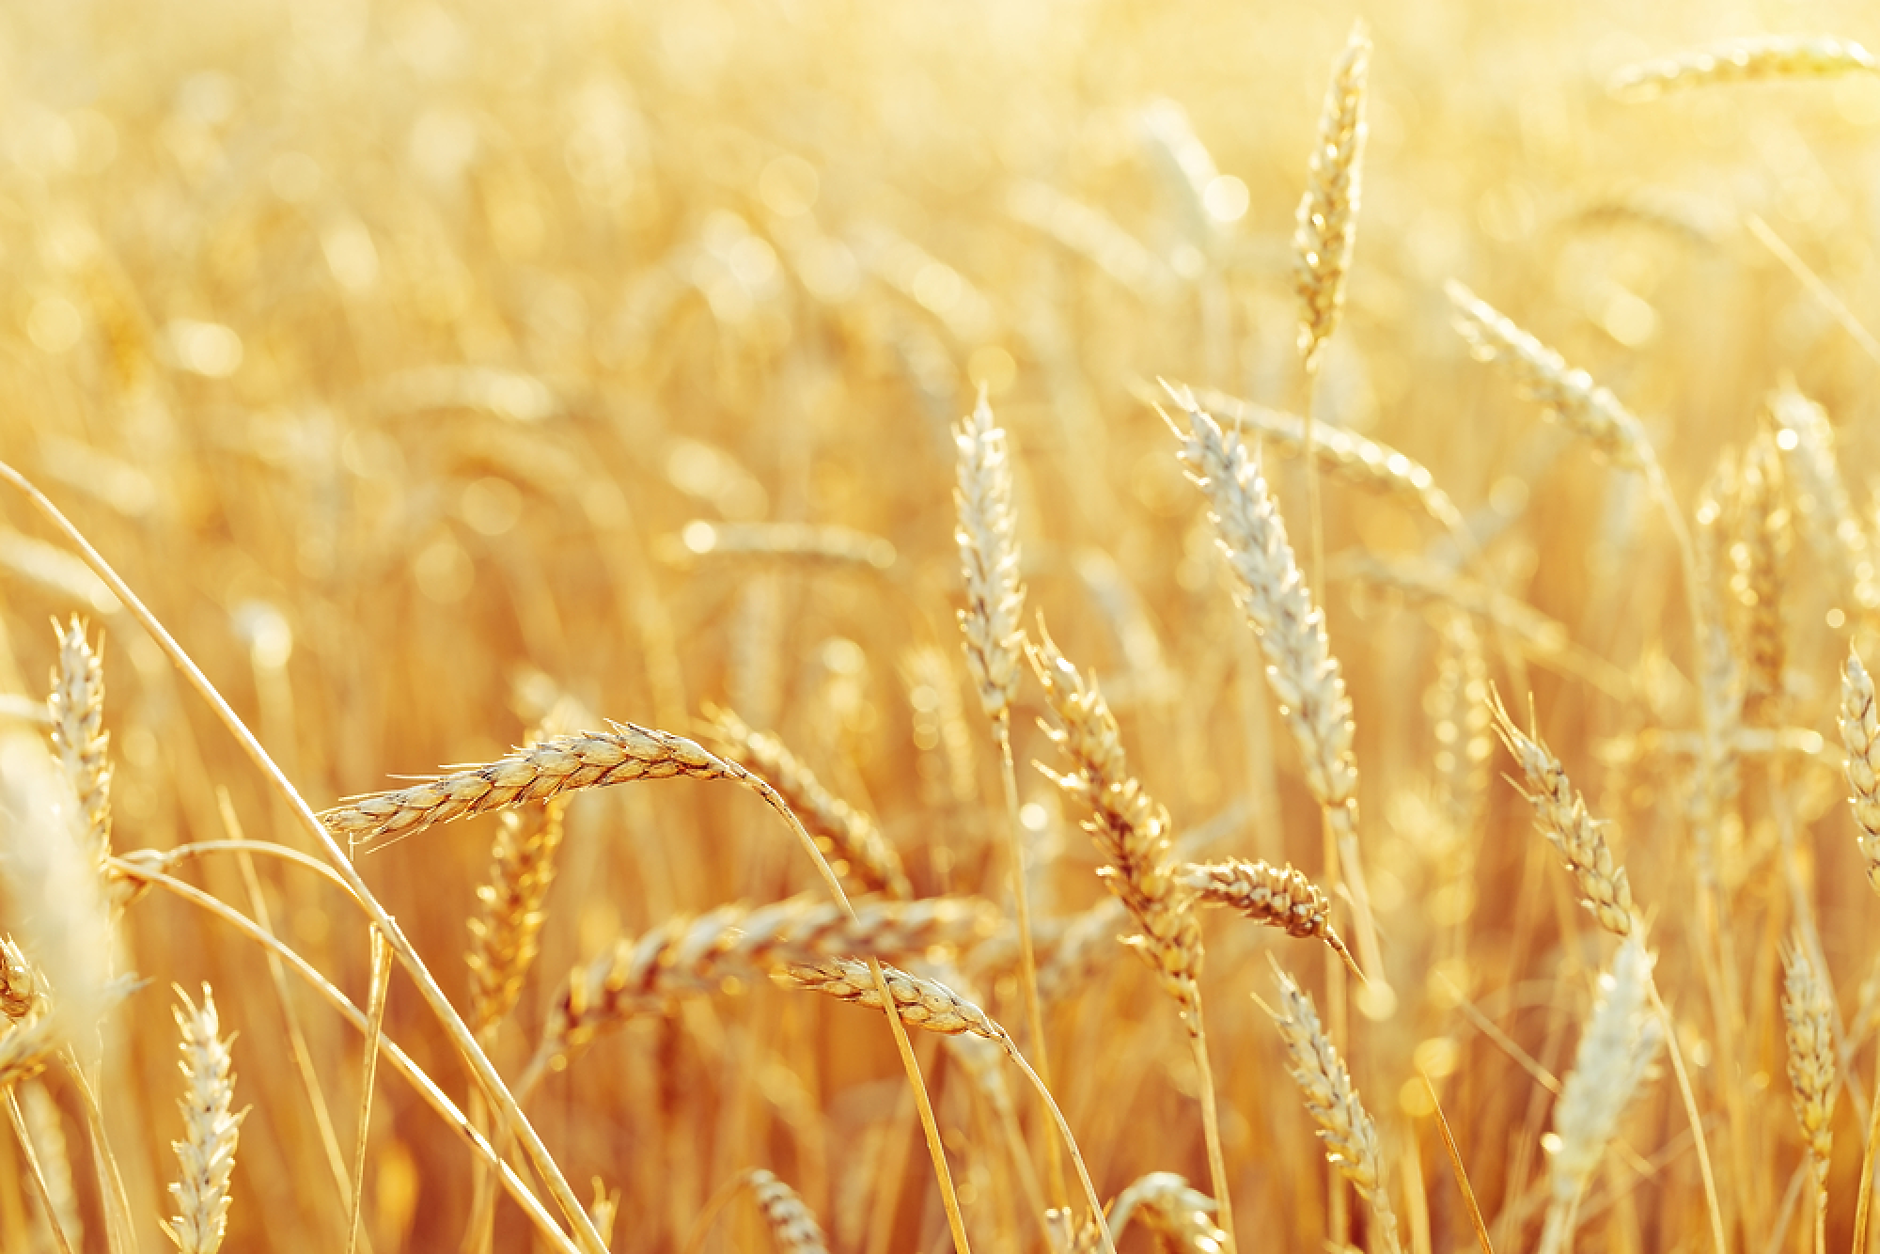 Близо 20 000 тона украинска пшеница са били внесени у нас миналата година